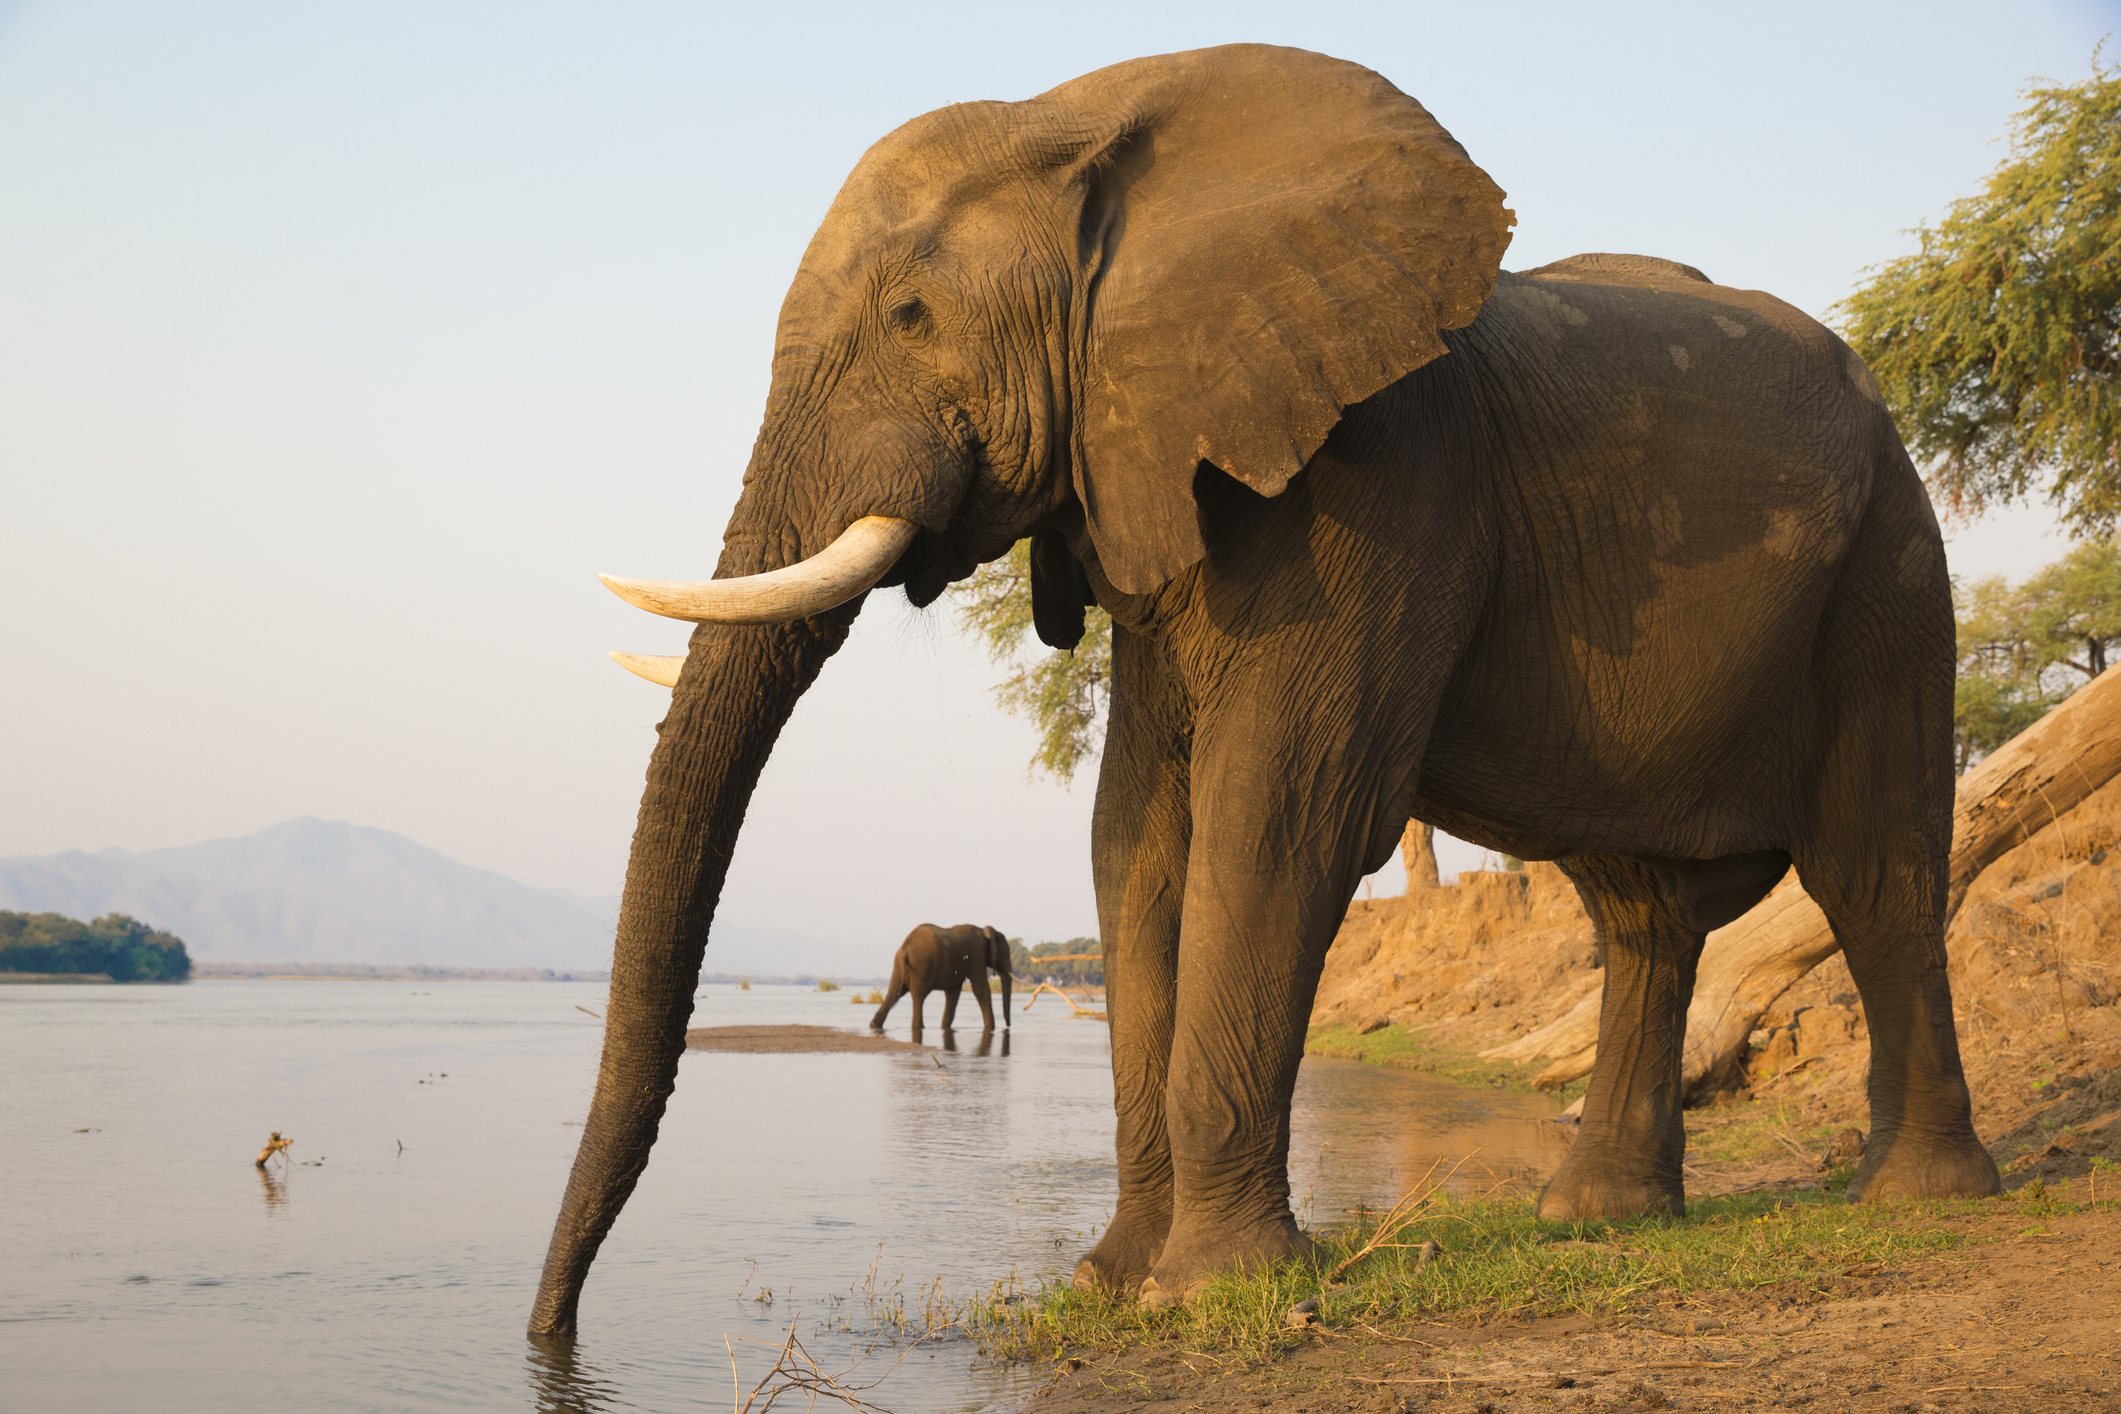 Elephants on the Zambezi River, Zimbabwe